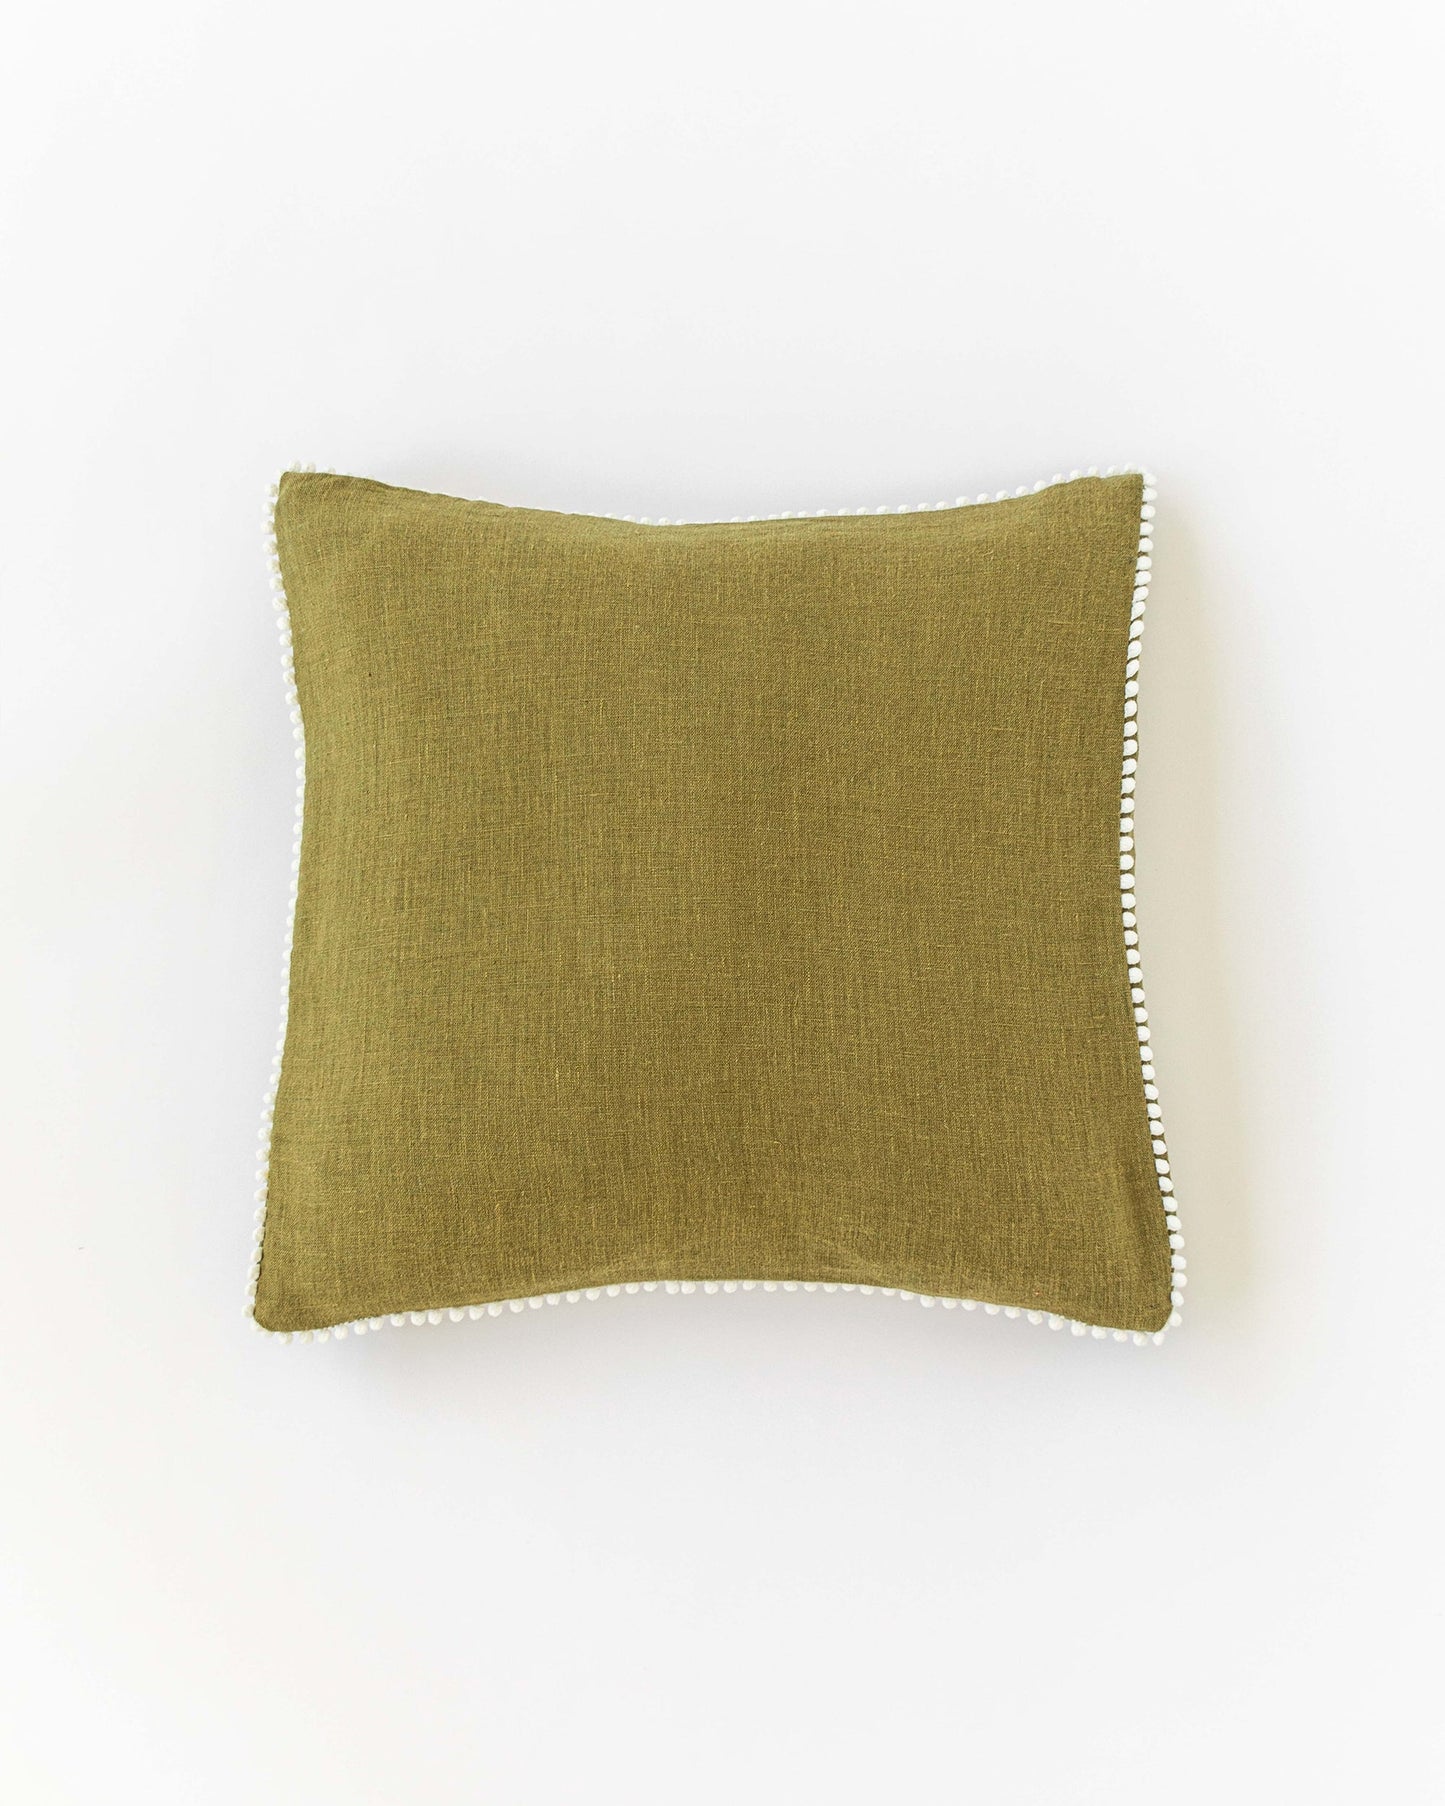 Pom pom trim linen pillowcase in Olive green - MagicLinen